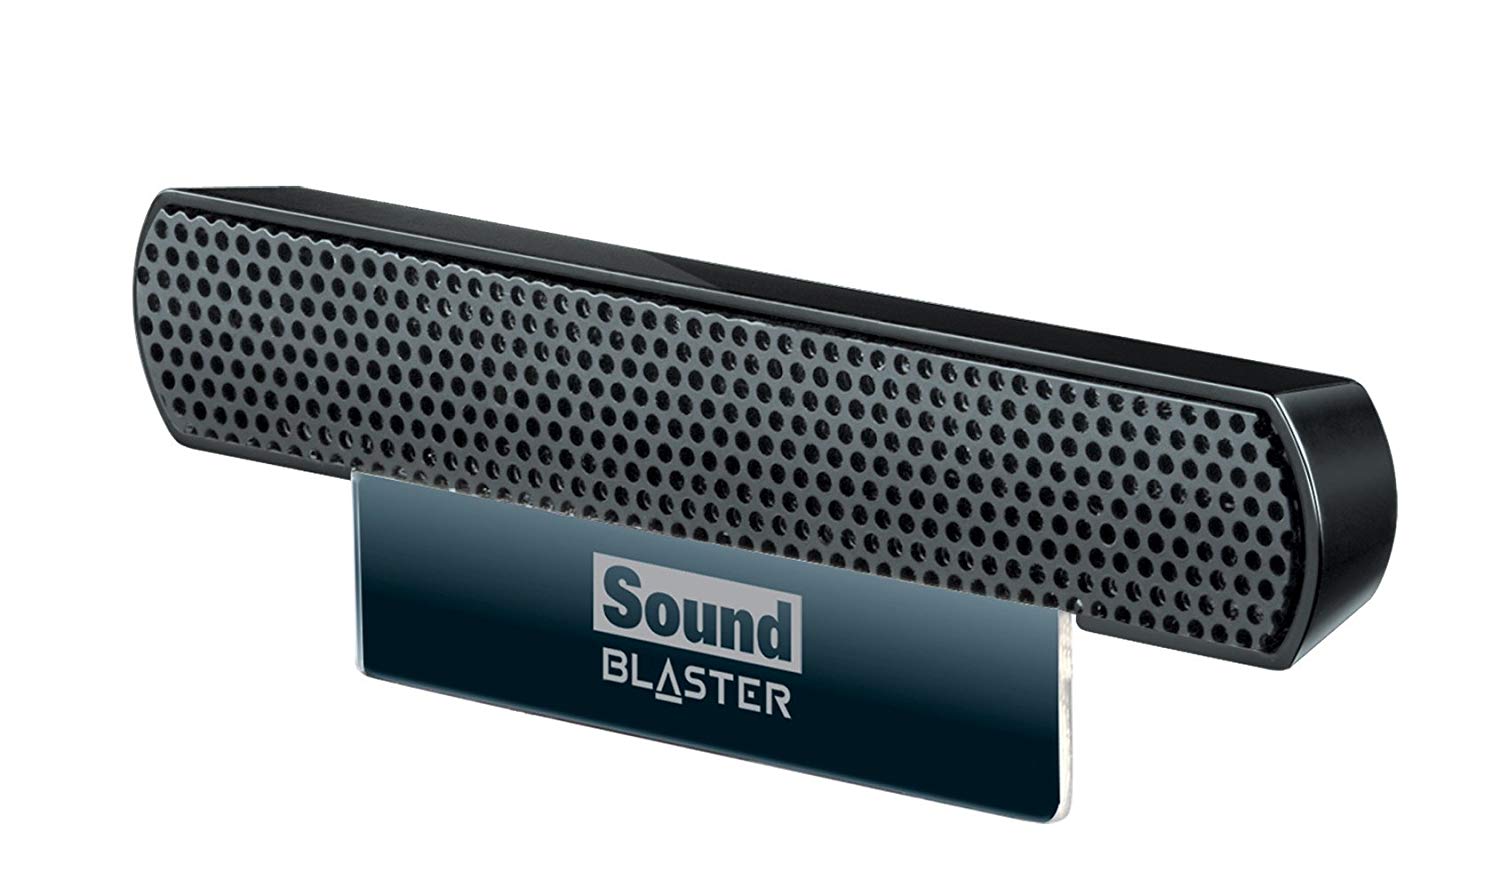 Creative Sound Blaster Z retail, PCIe